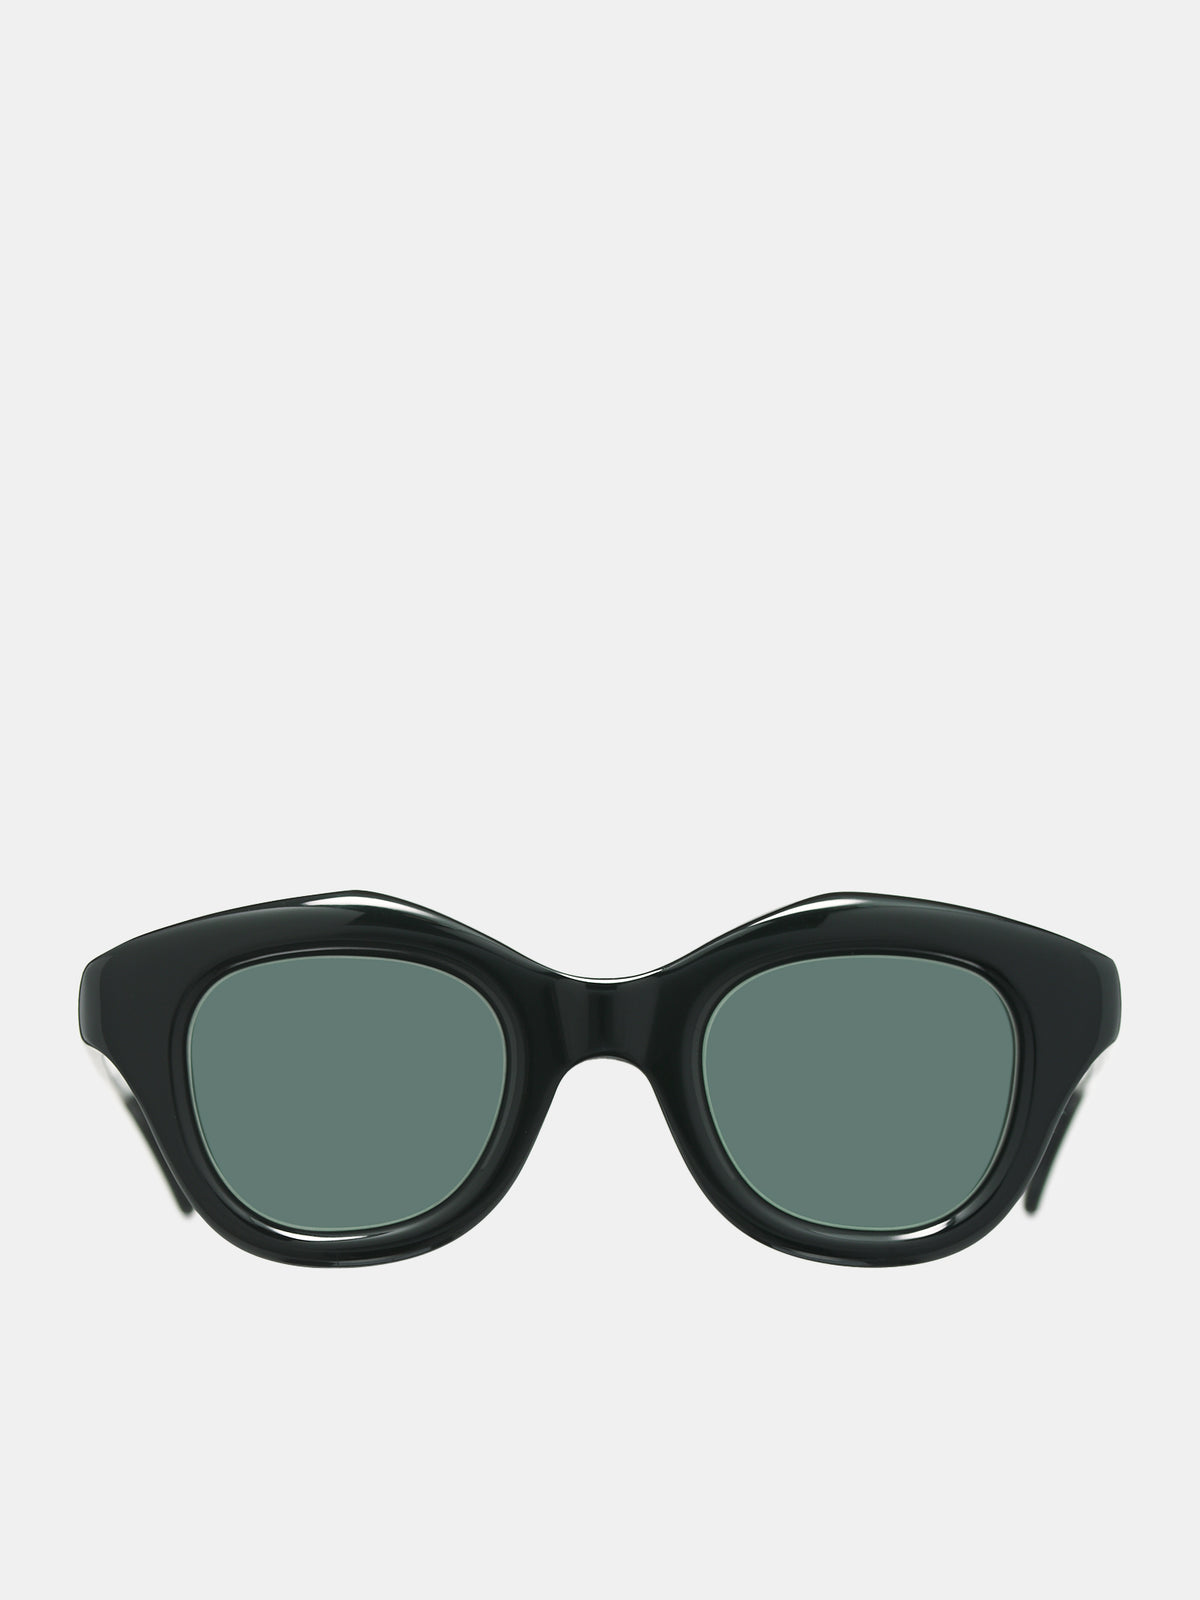 Hook Sunglasses (HOOK-BLACK-GRAY4)